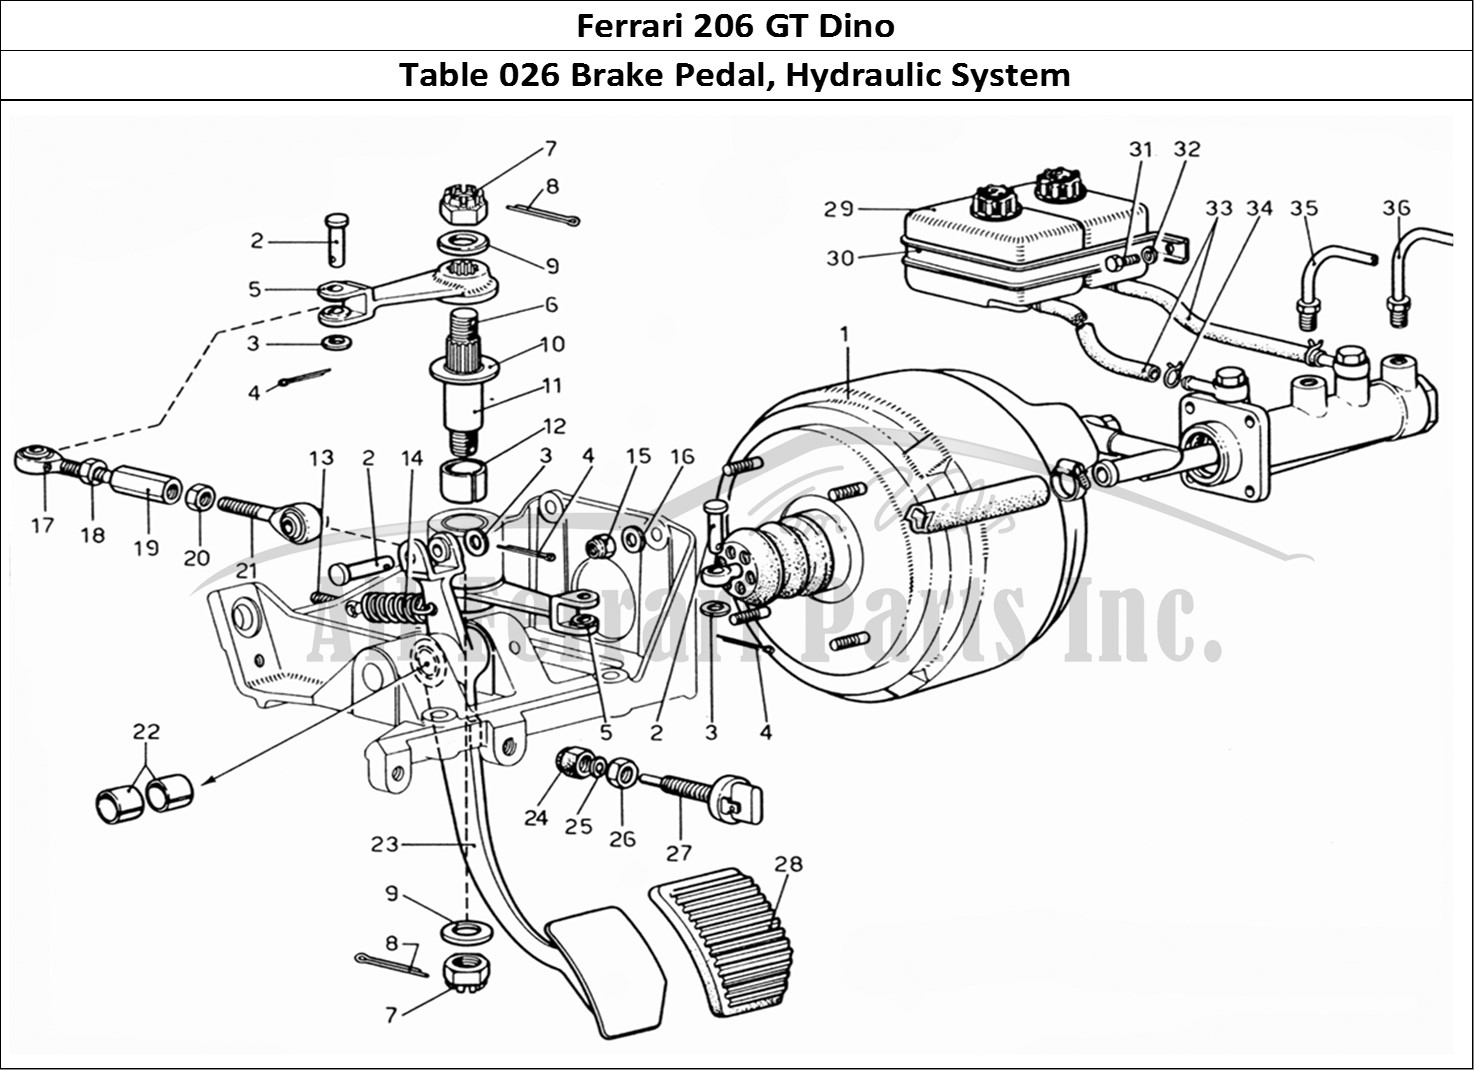 Ferrari Parts Ferrari 206 GT Dino (1969) Page 026 Brake Hydraulic Control